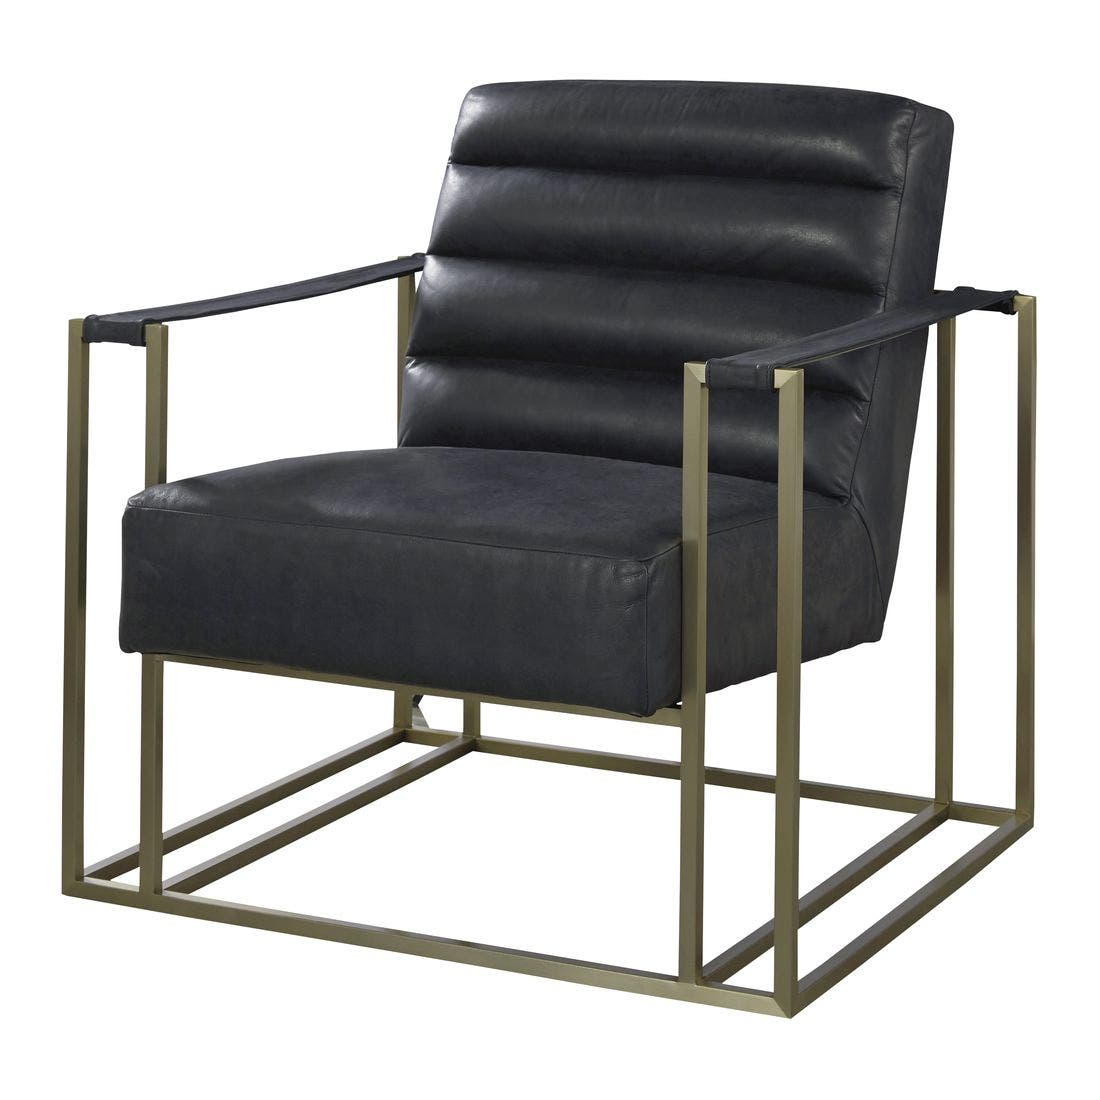 19134968-687535-653-furniture-sofa-recliner-armchair-01